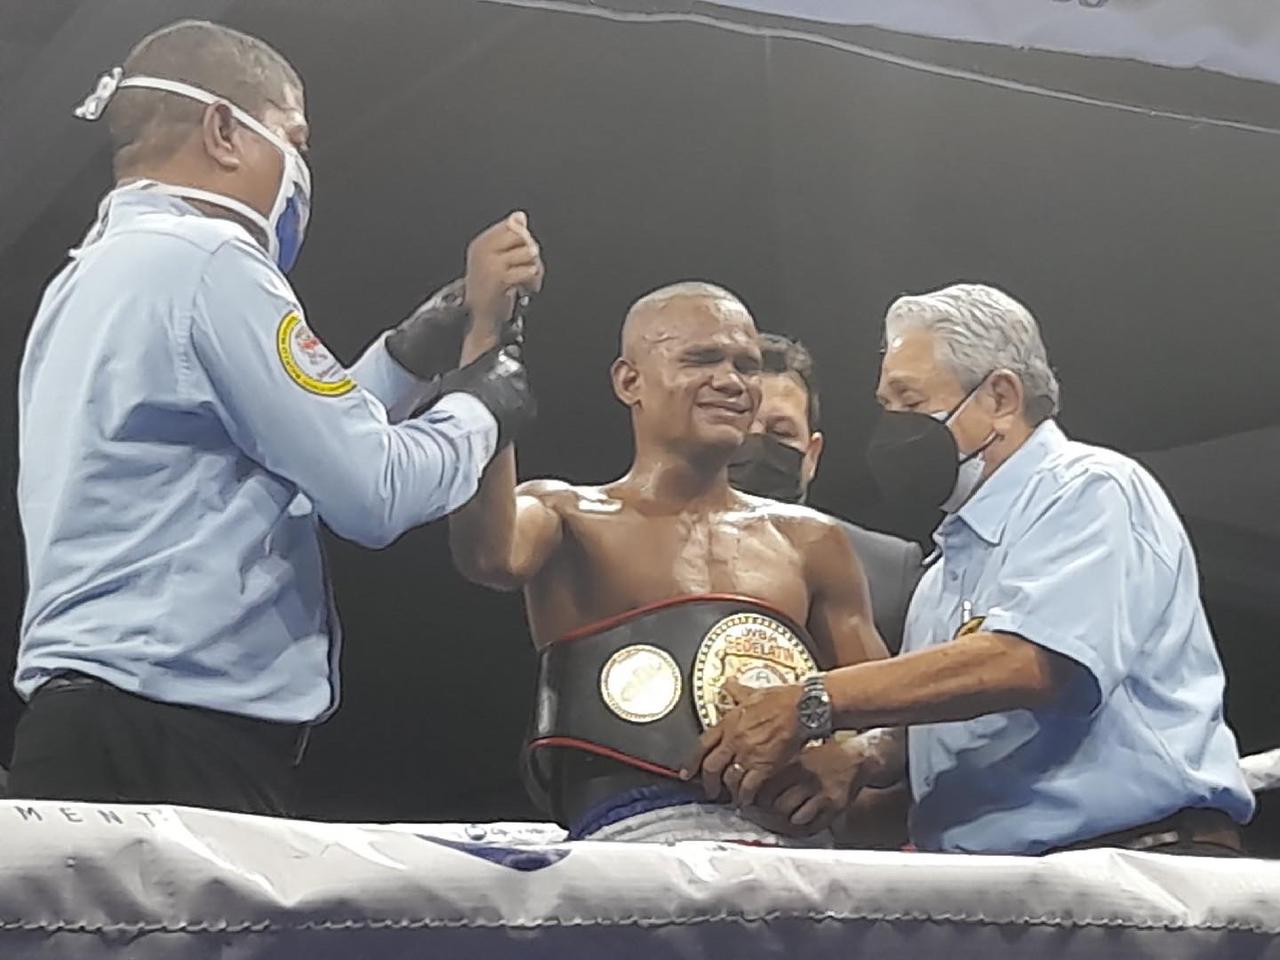 Fernandez won the WBA-Fedelatin belt in a close duel against Lara